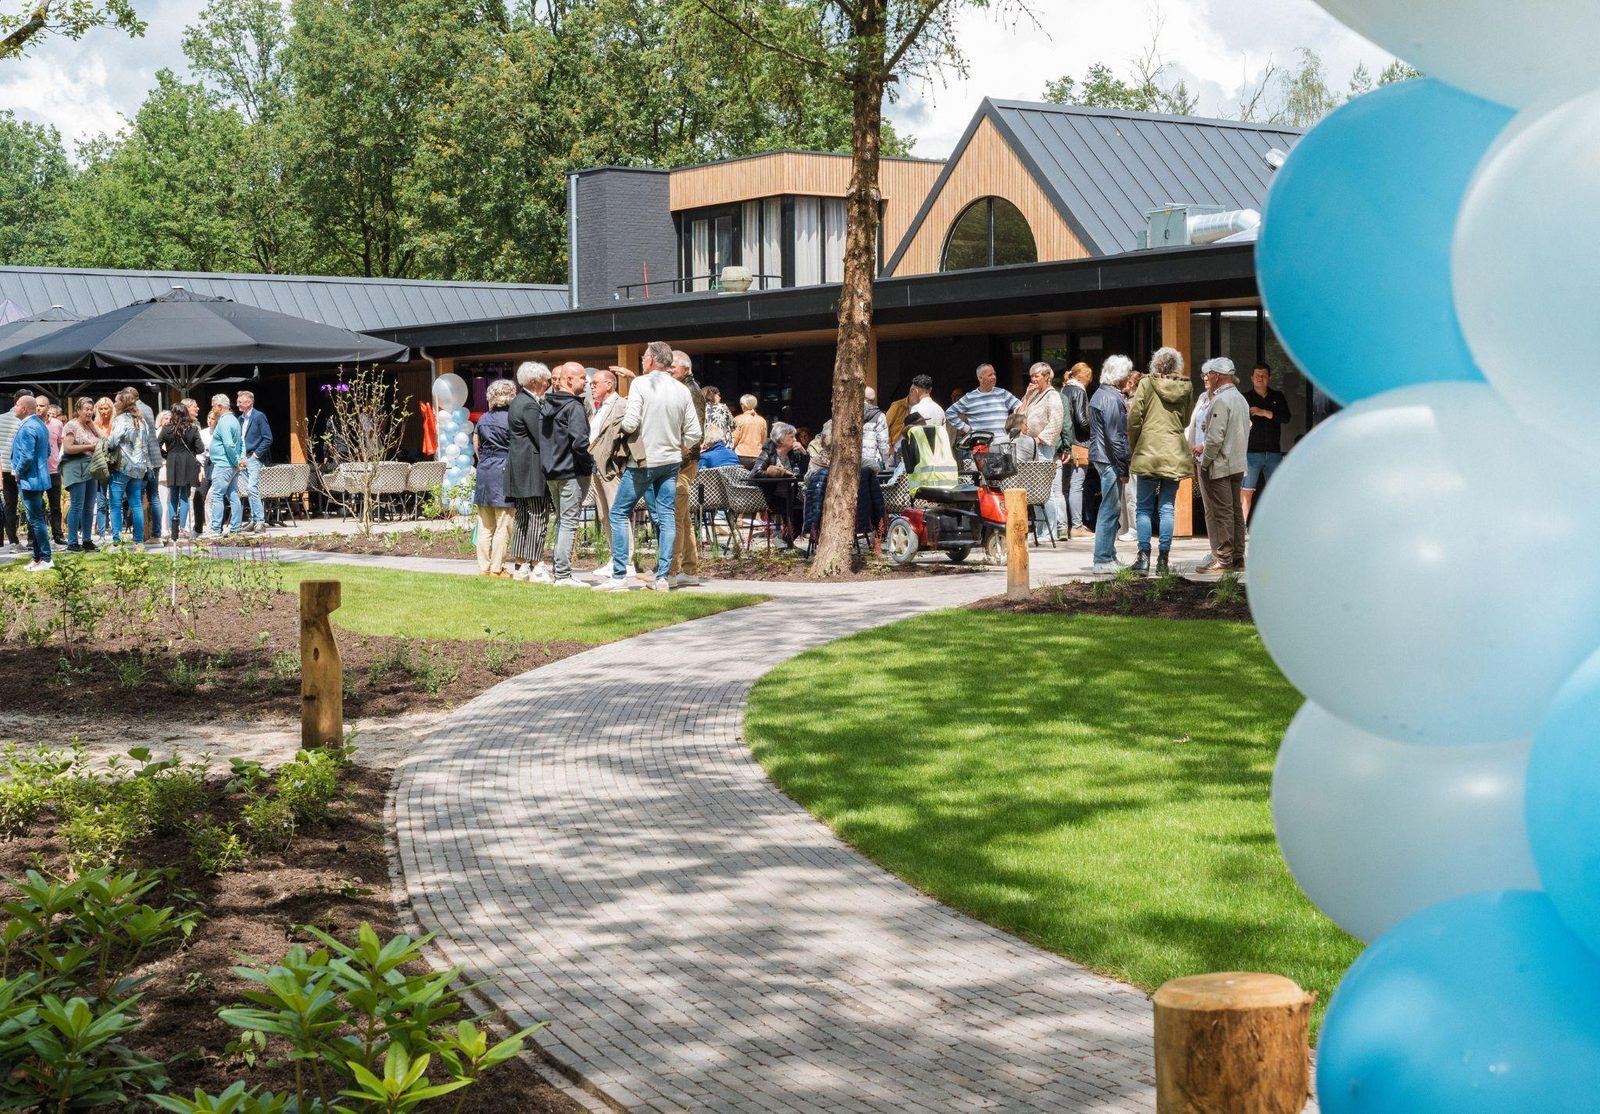 Der neue Ferienpark Resort de Brabantse Kempen wurde soeben eröffnet